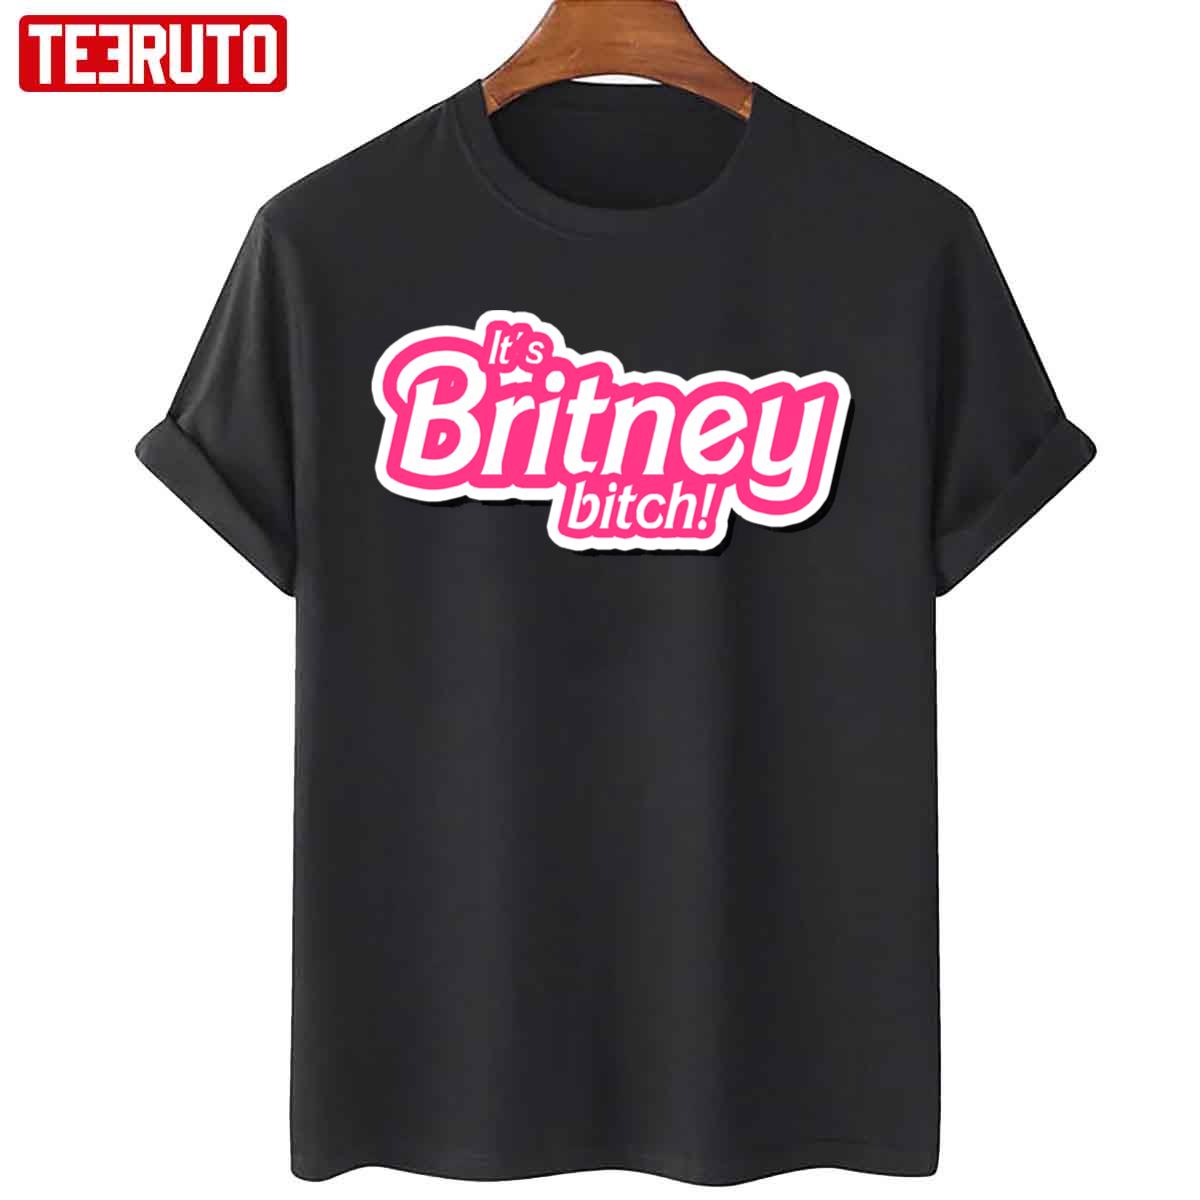 It's Britney Spears Bitch Unisex Sweatshirt